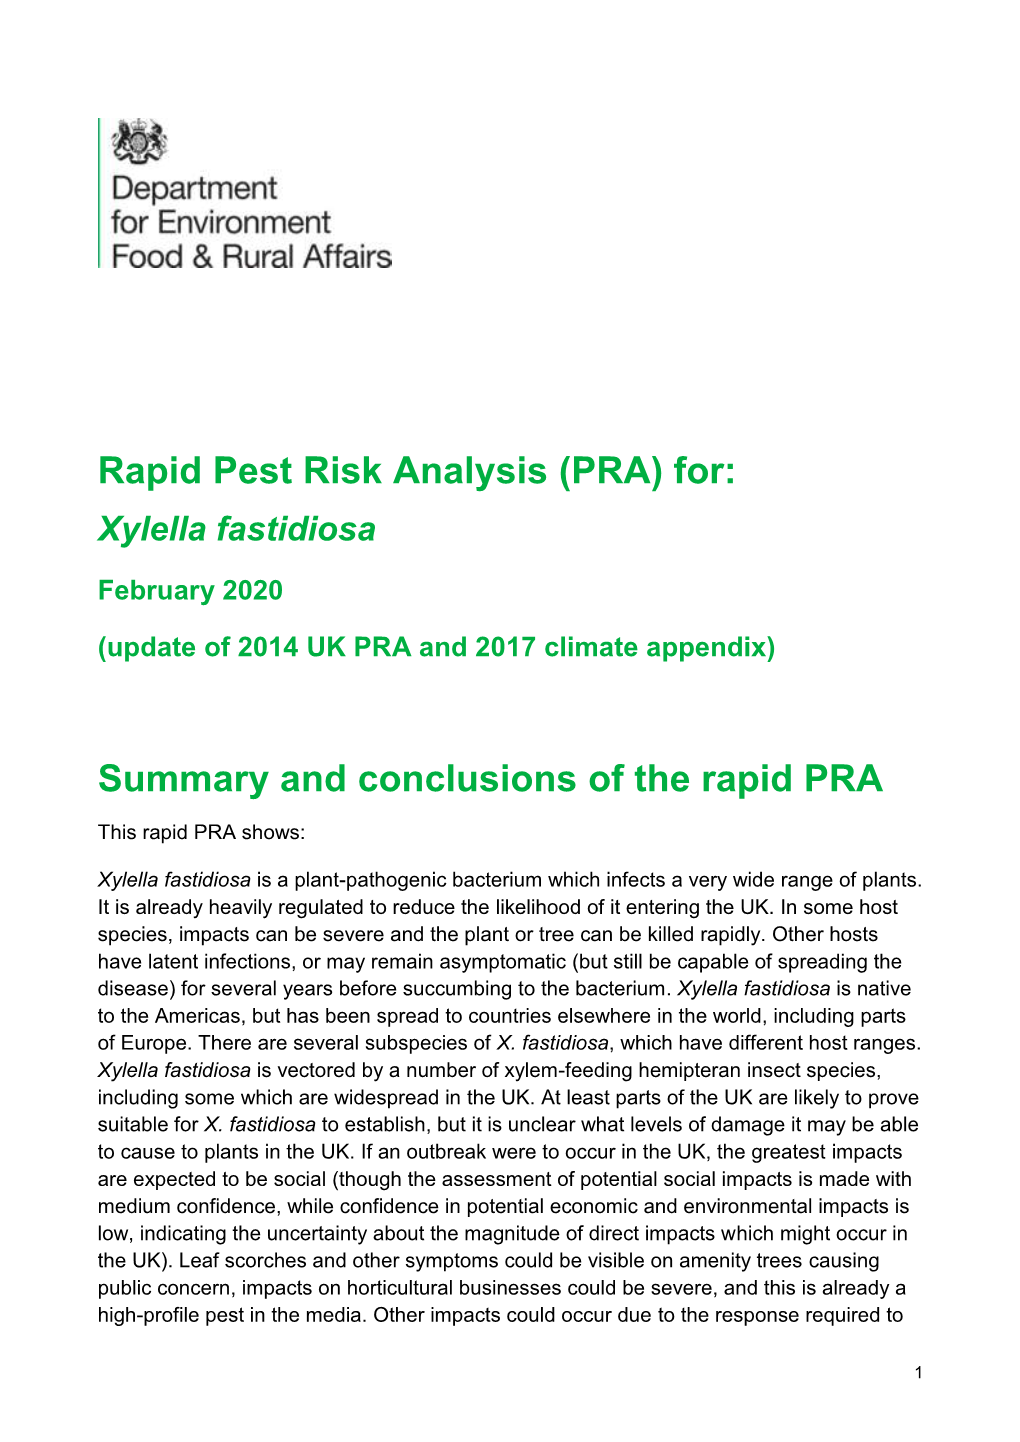 Rapid Pest Risk Analysis (PRA) For: Xylella Fastidiosa